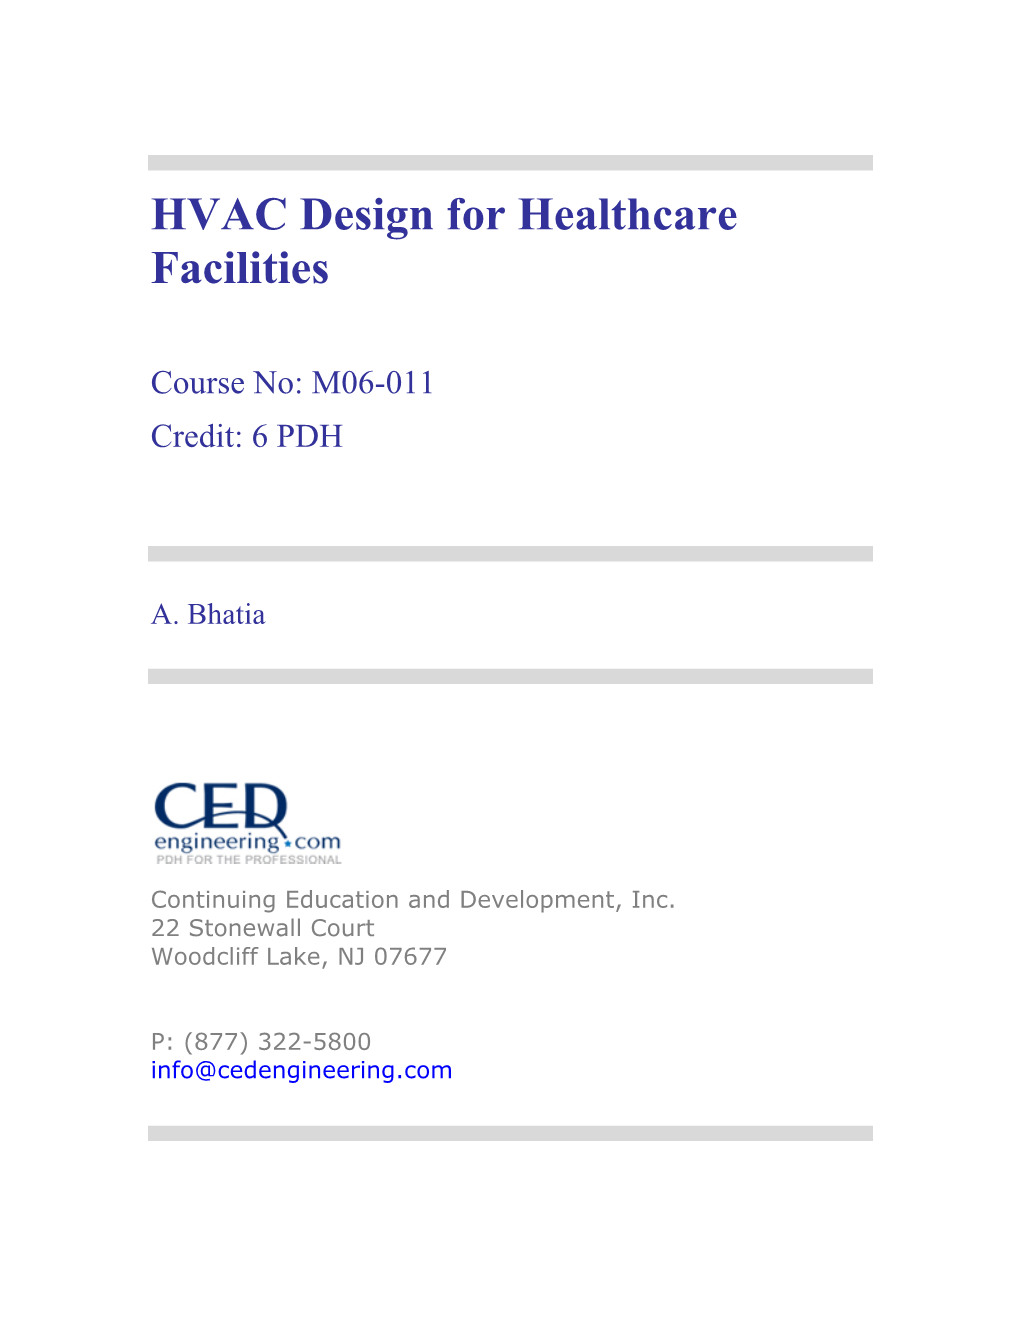 HVAC Design for Healthcare Facilities